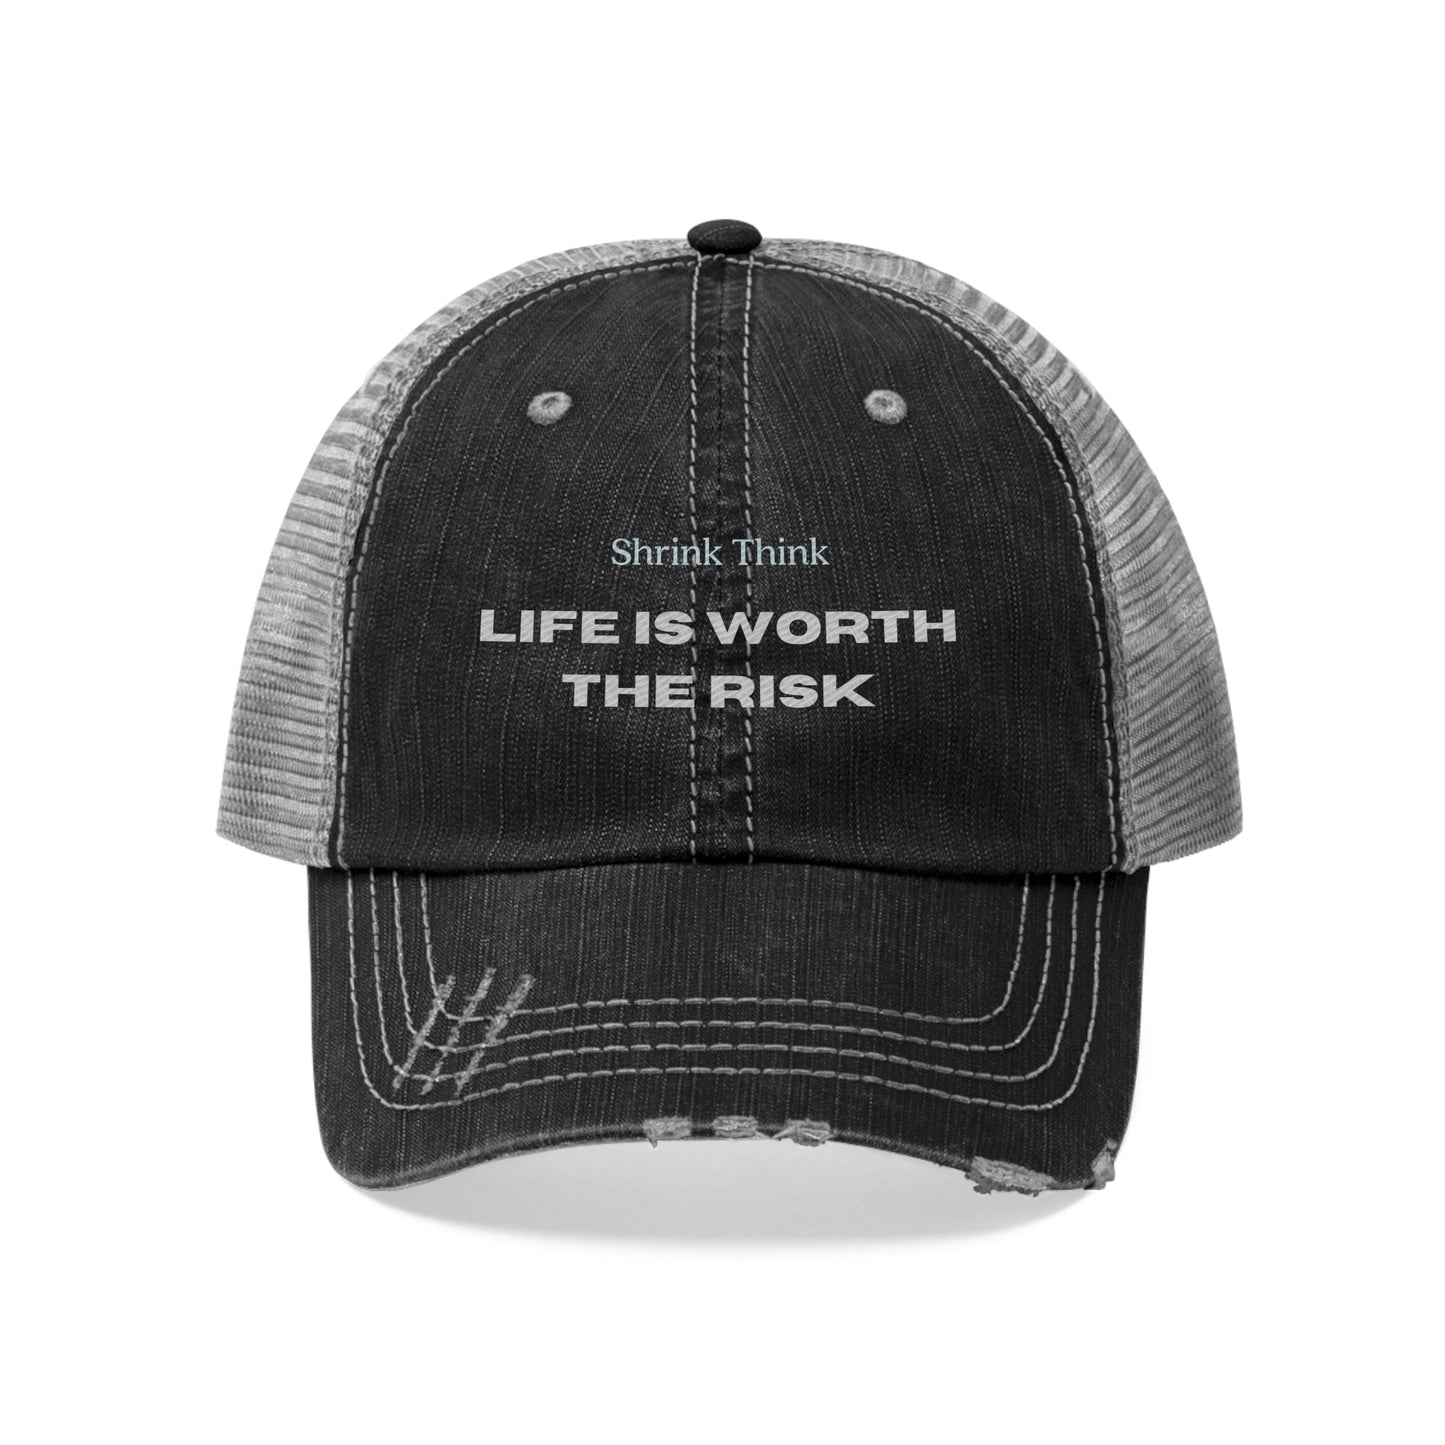 Worth the Risk Trucker Hat